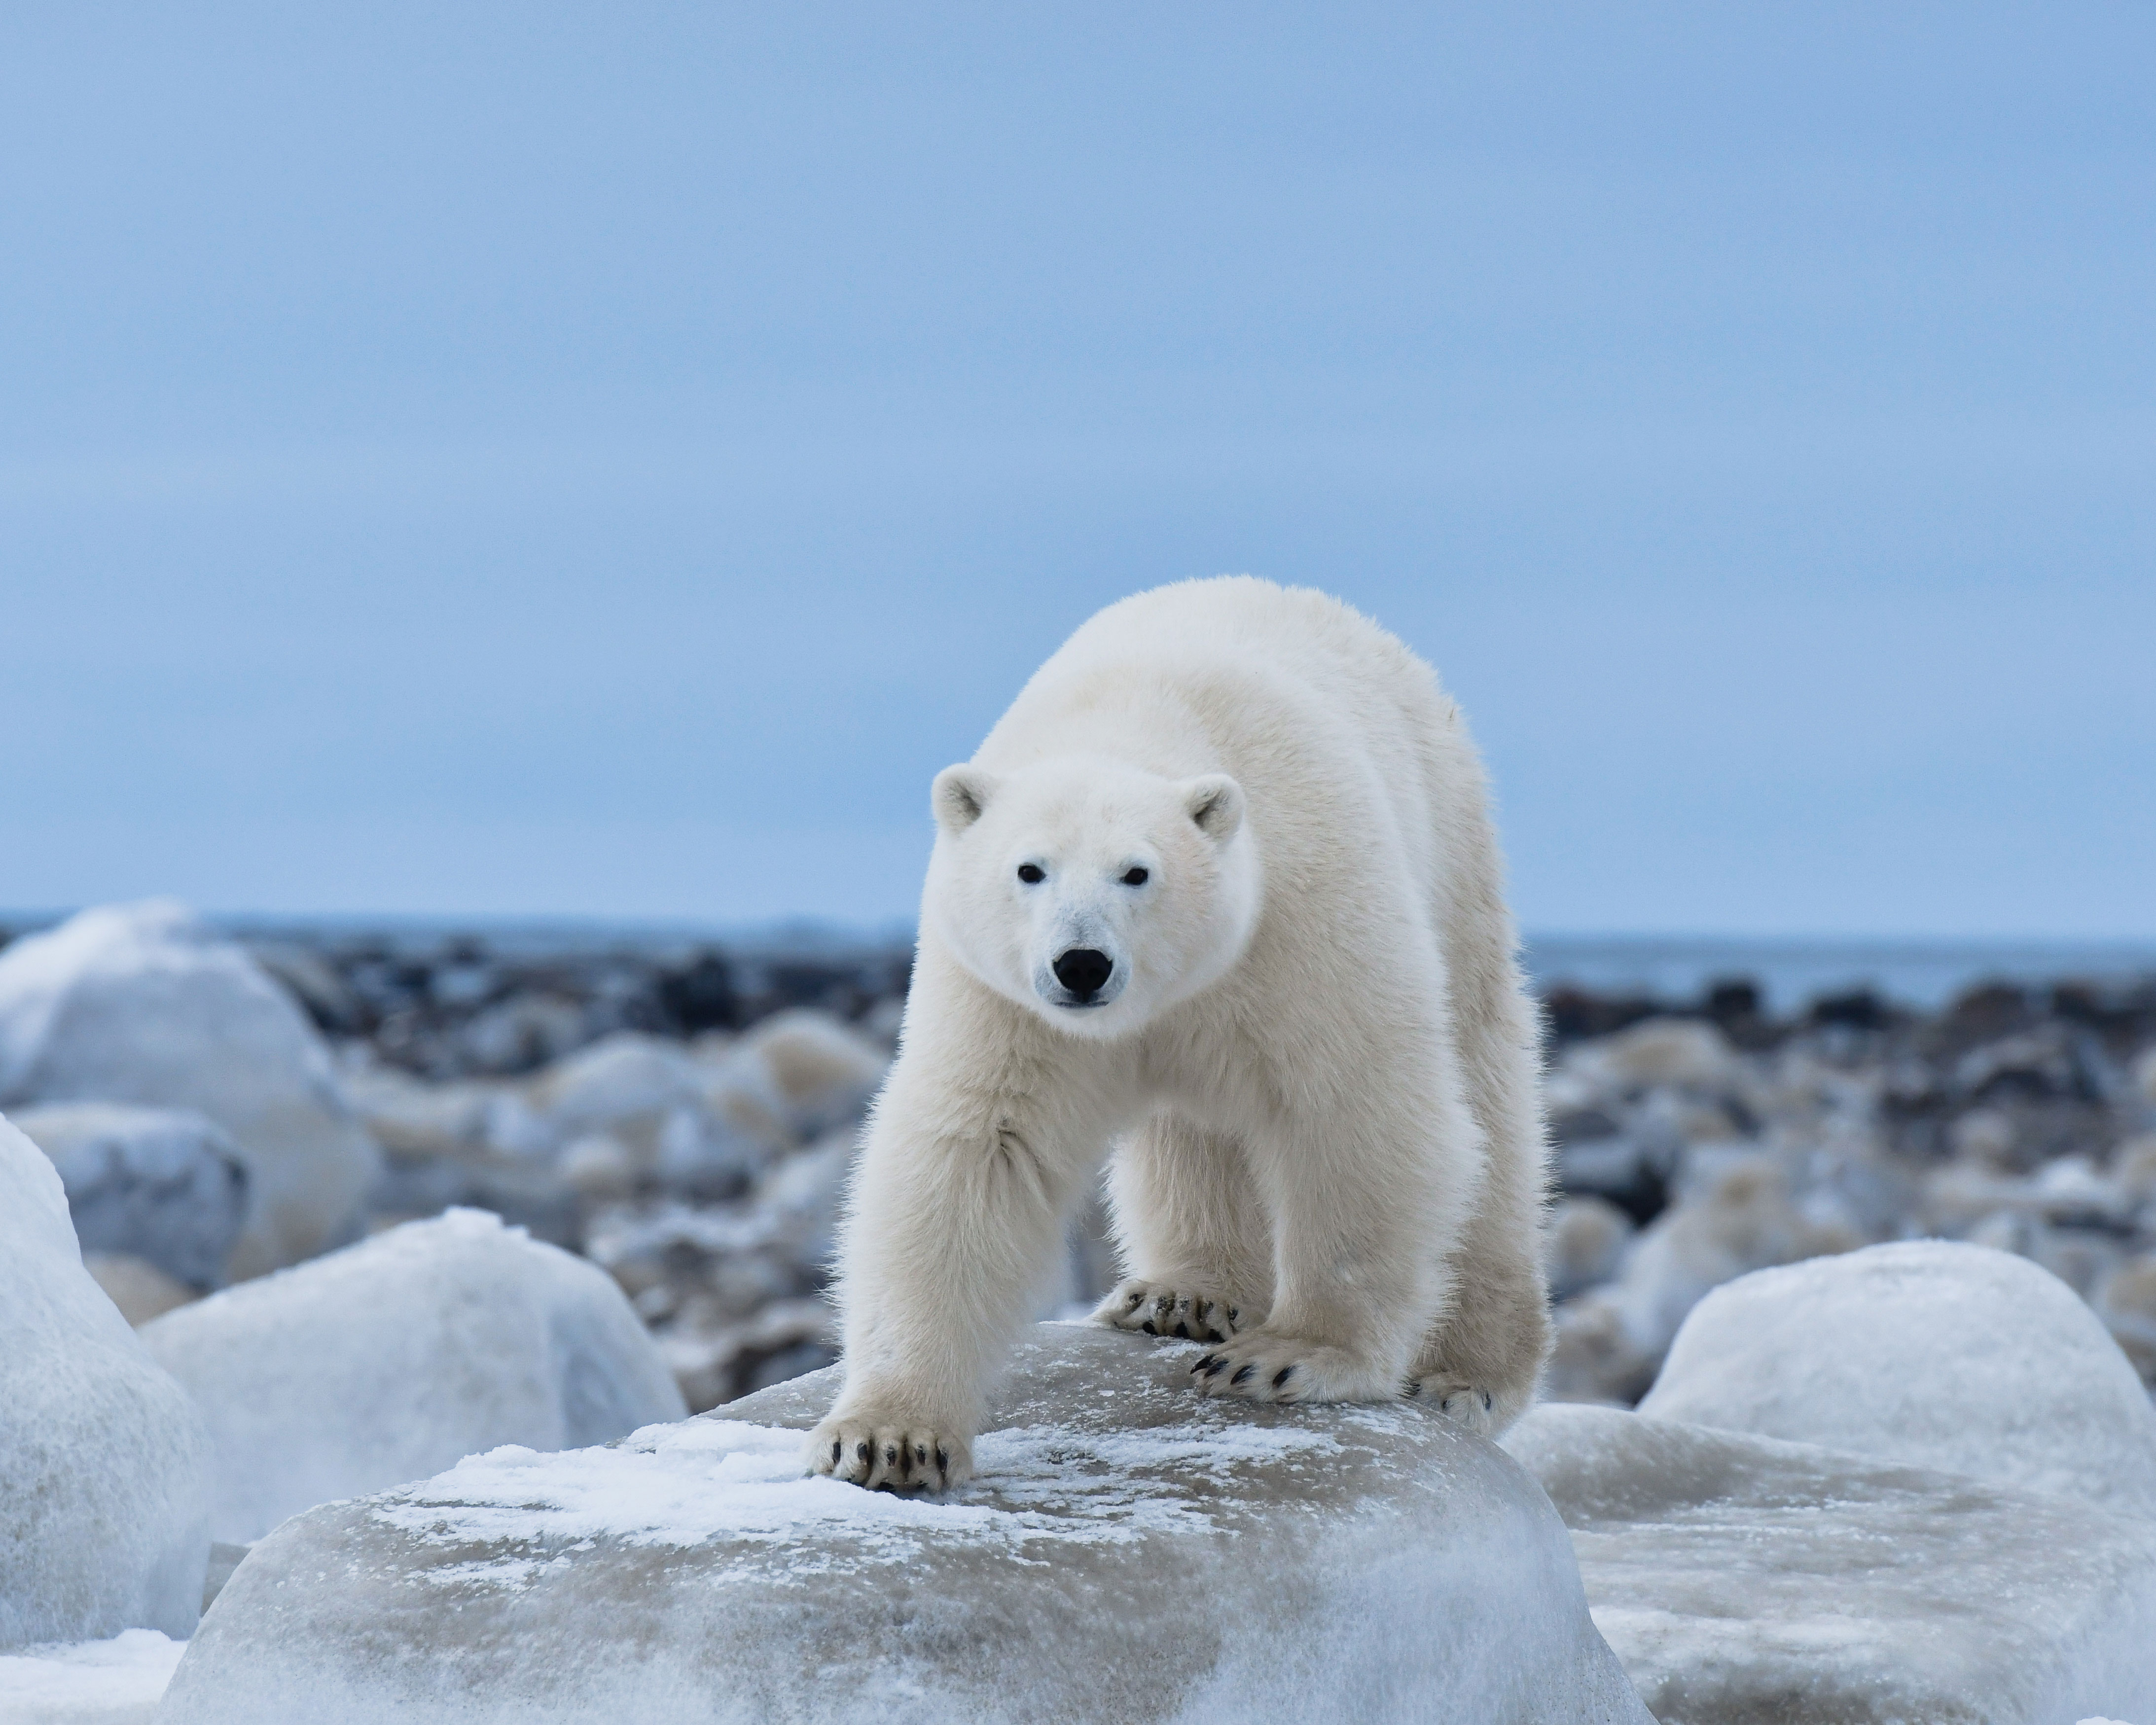 Polar Bear Watching: A polar bear on a rock looking at the camera.